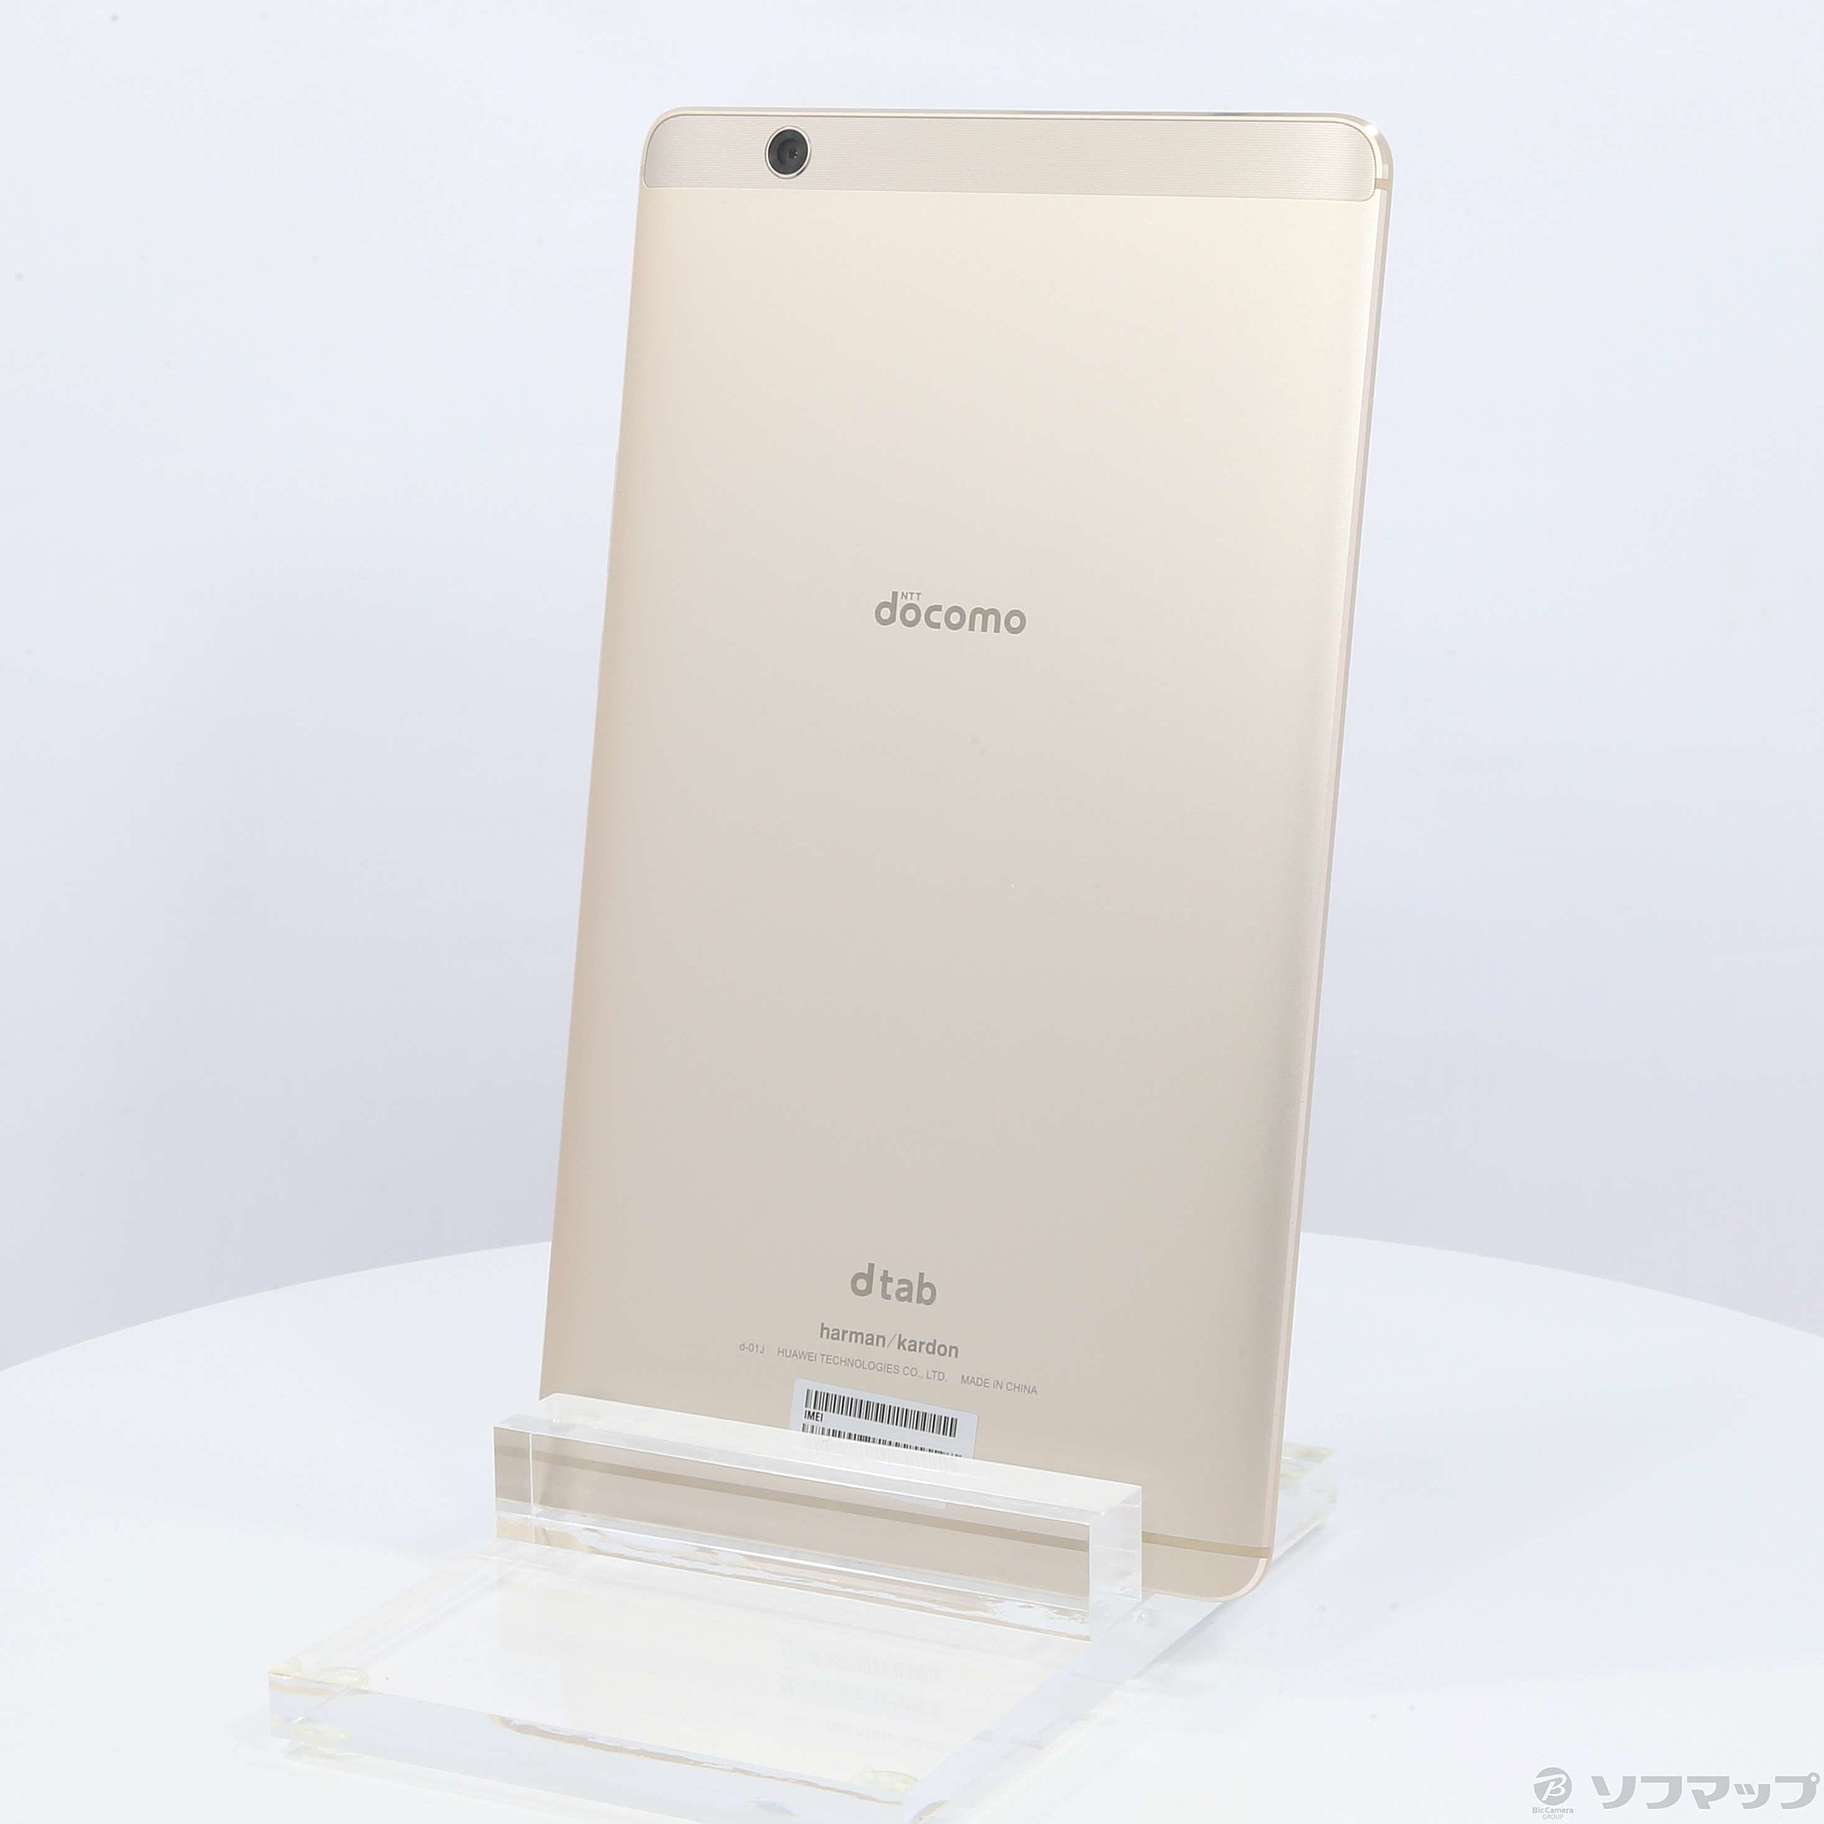 新品未使用品Huawei dtab Compact d-01J Gold 2台